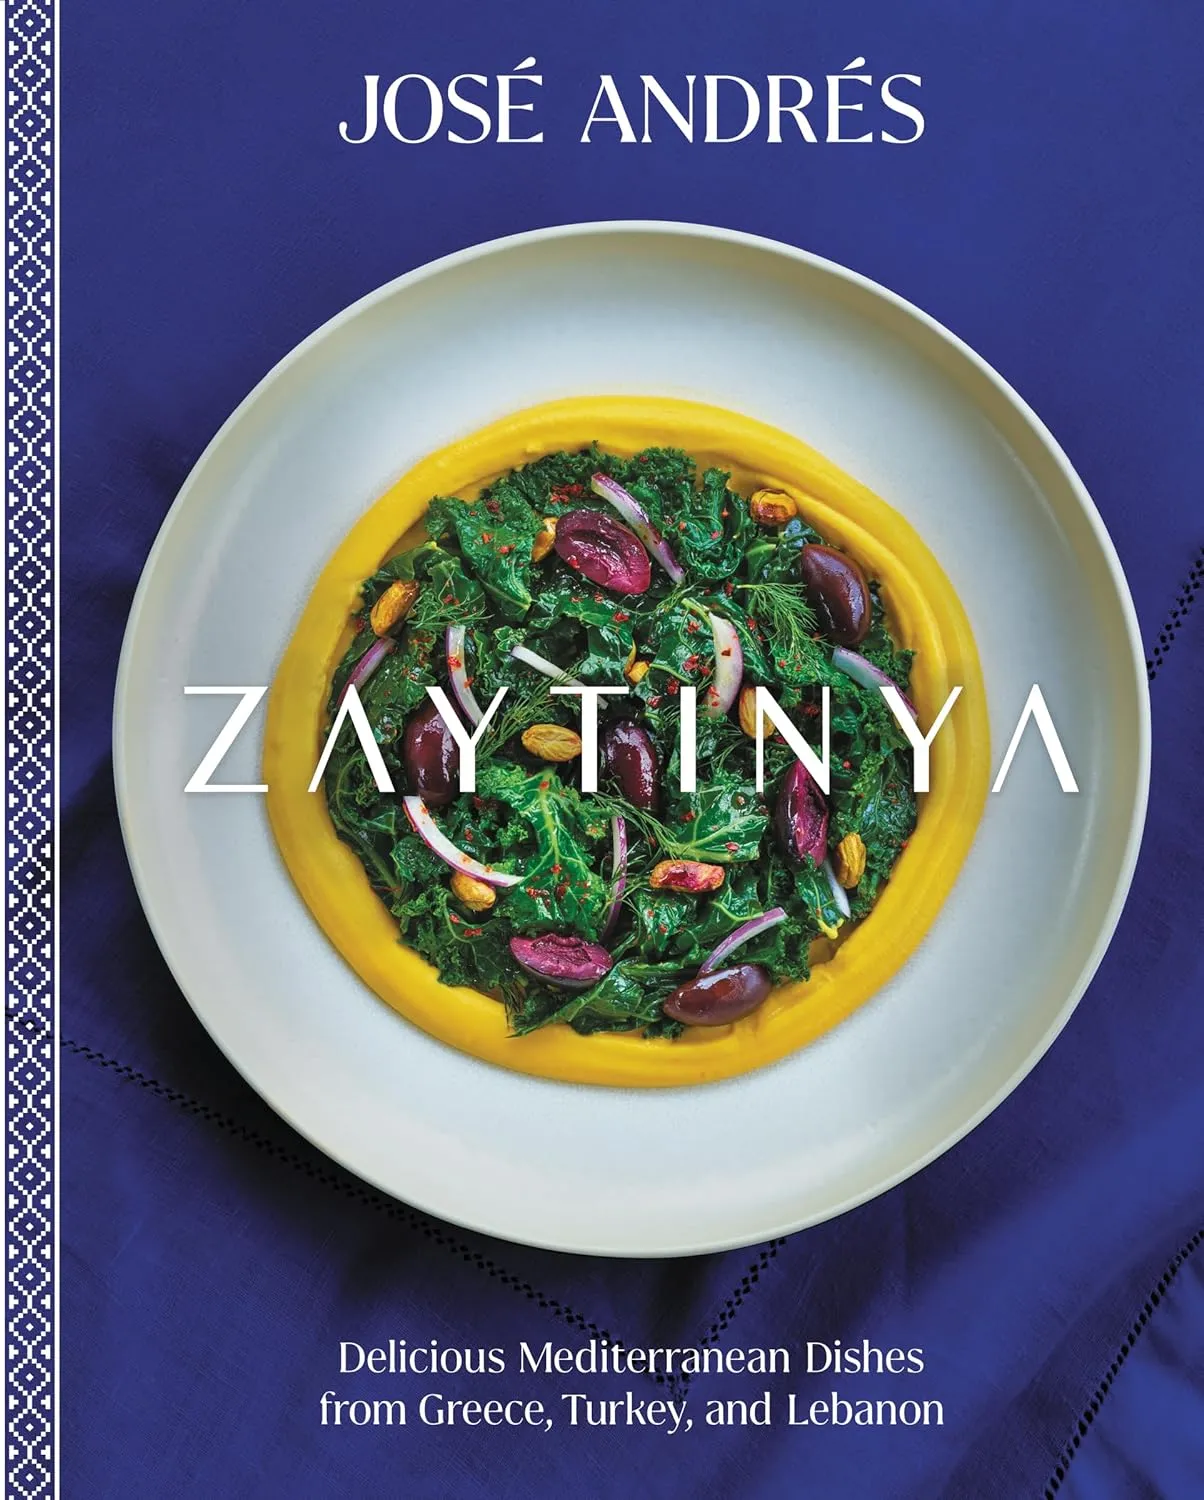 Zaytinya cookbook cover